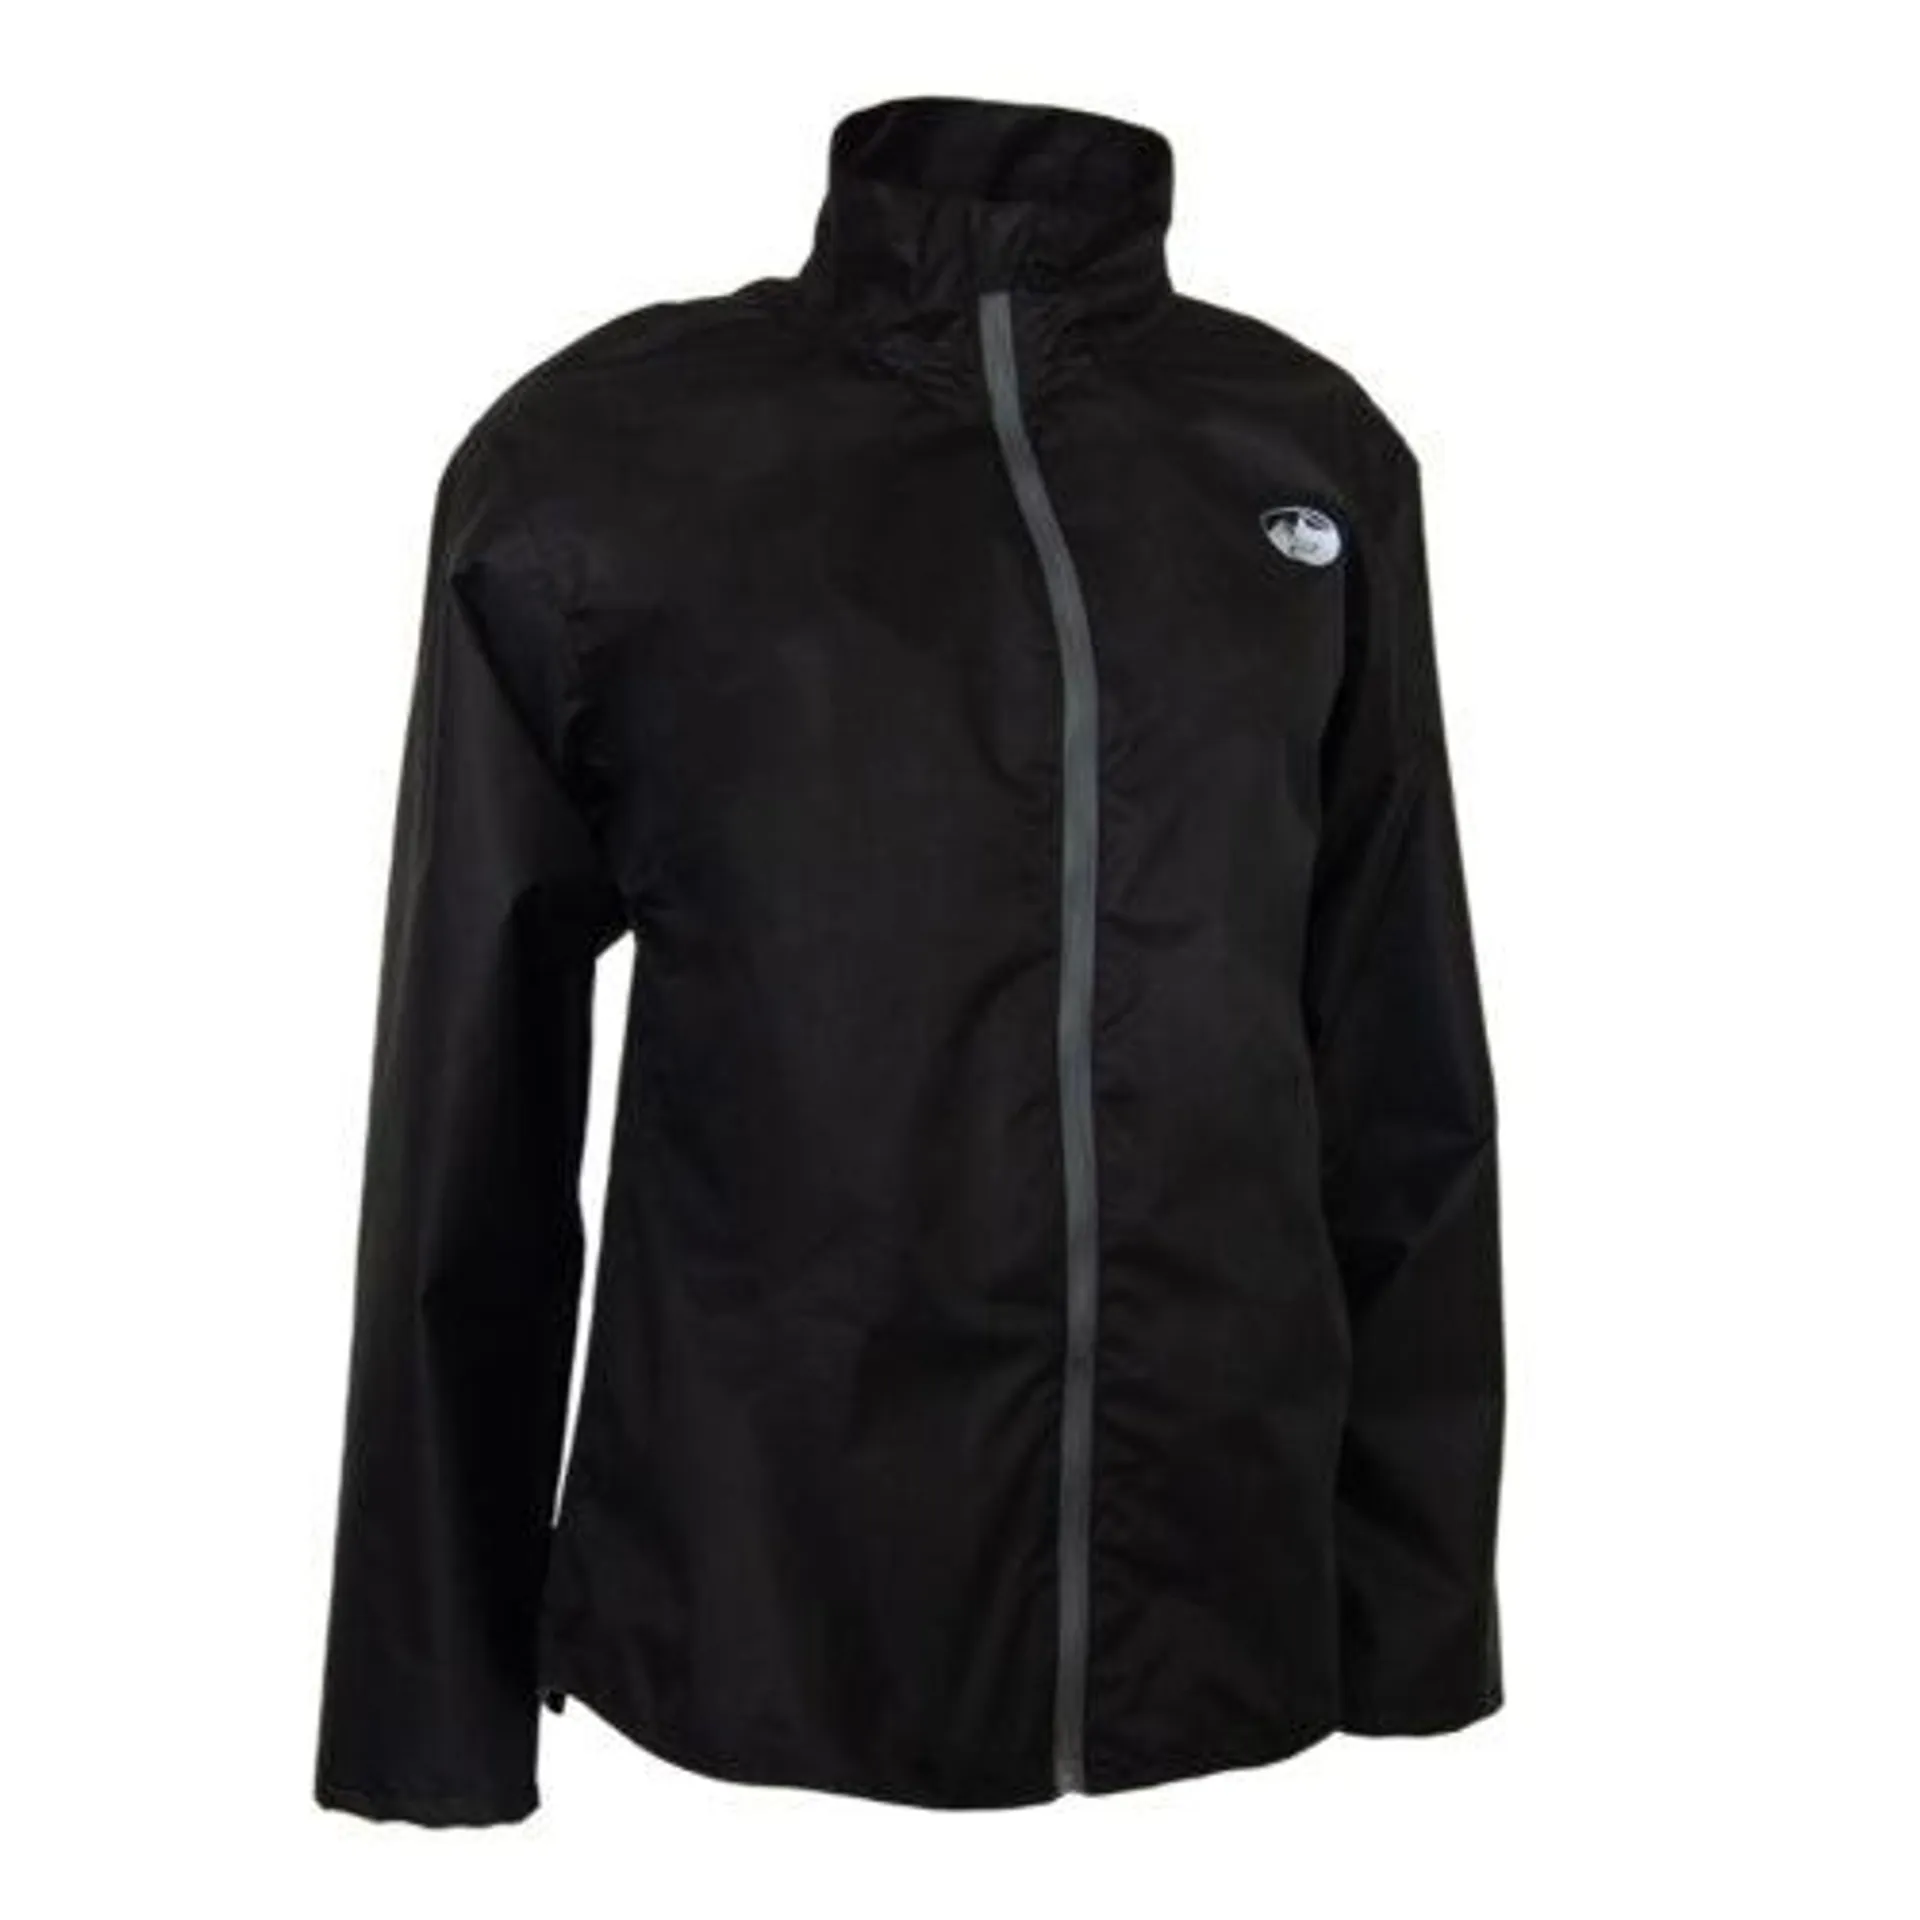 Cross Creek Rain Jacket Long Sleeve – Black